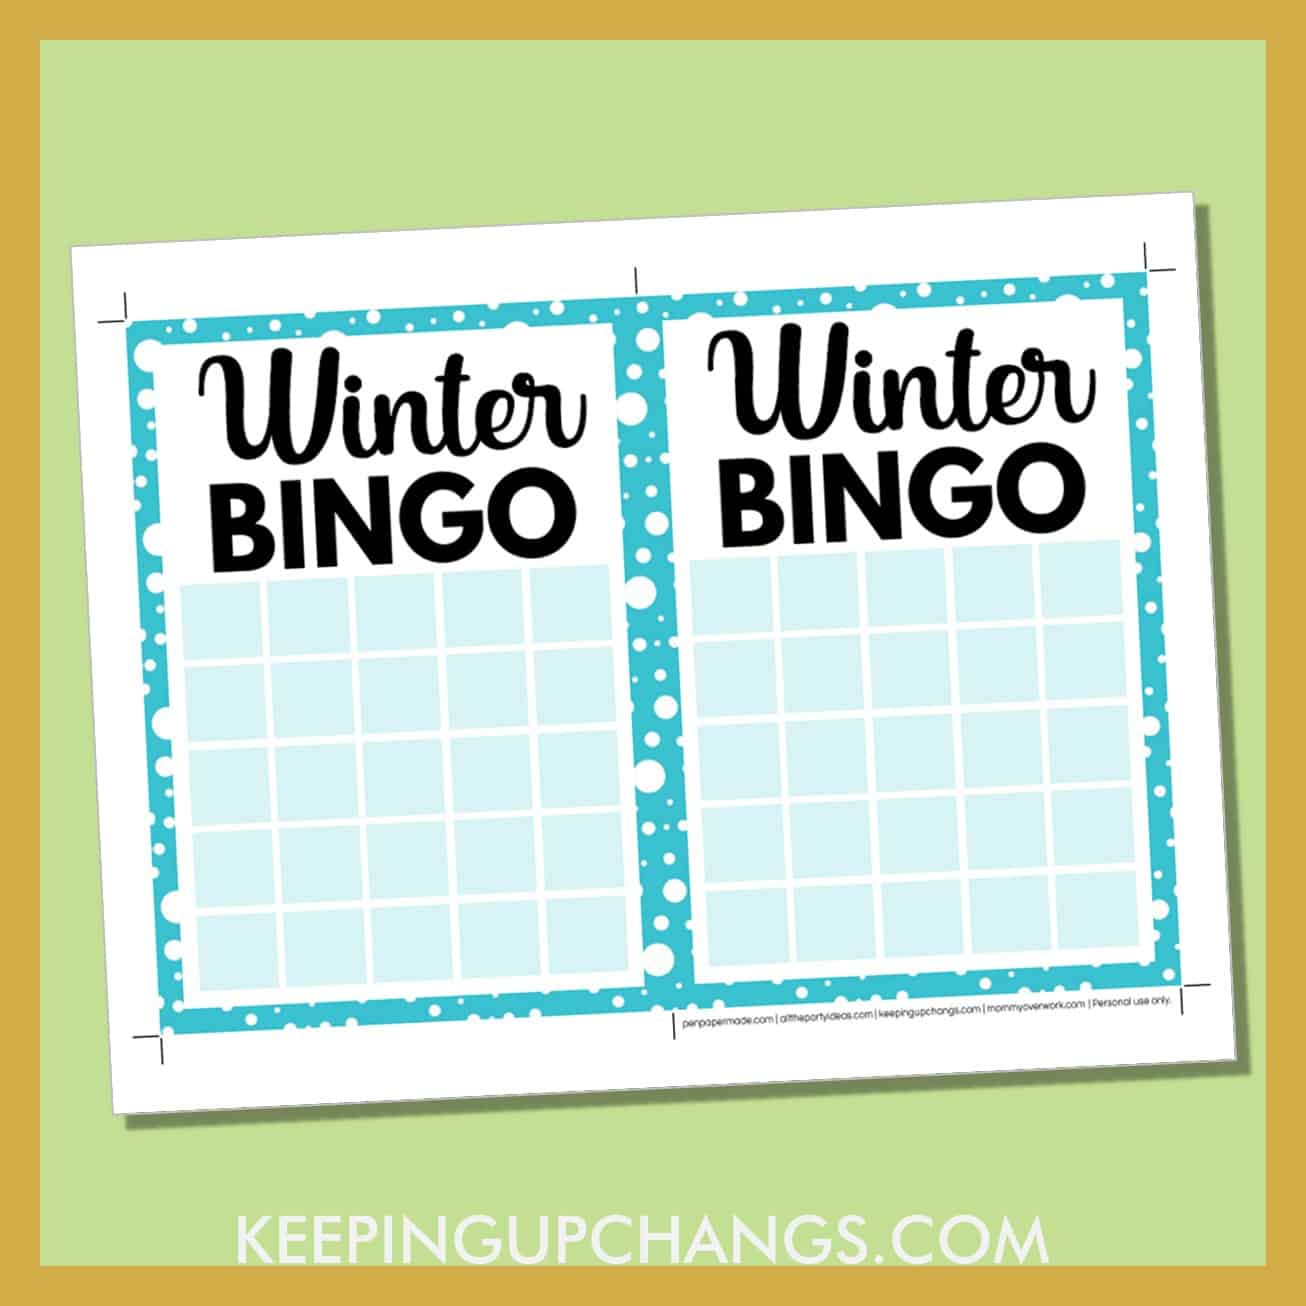 free winter christmas bingo 5x5 grid game board blank template.